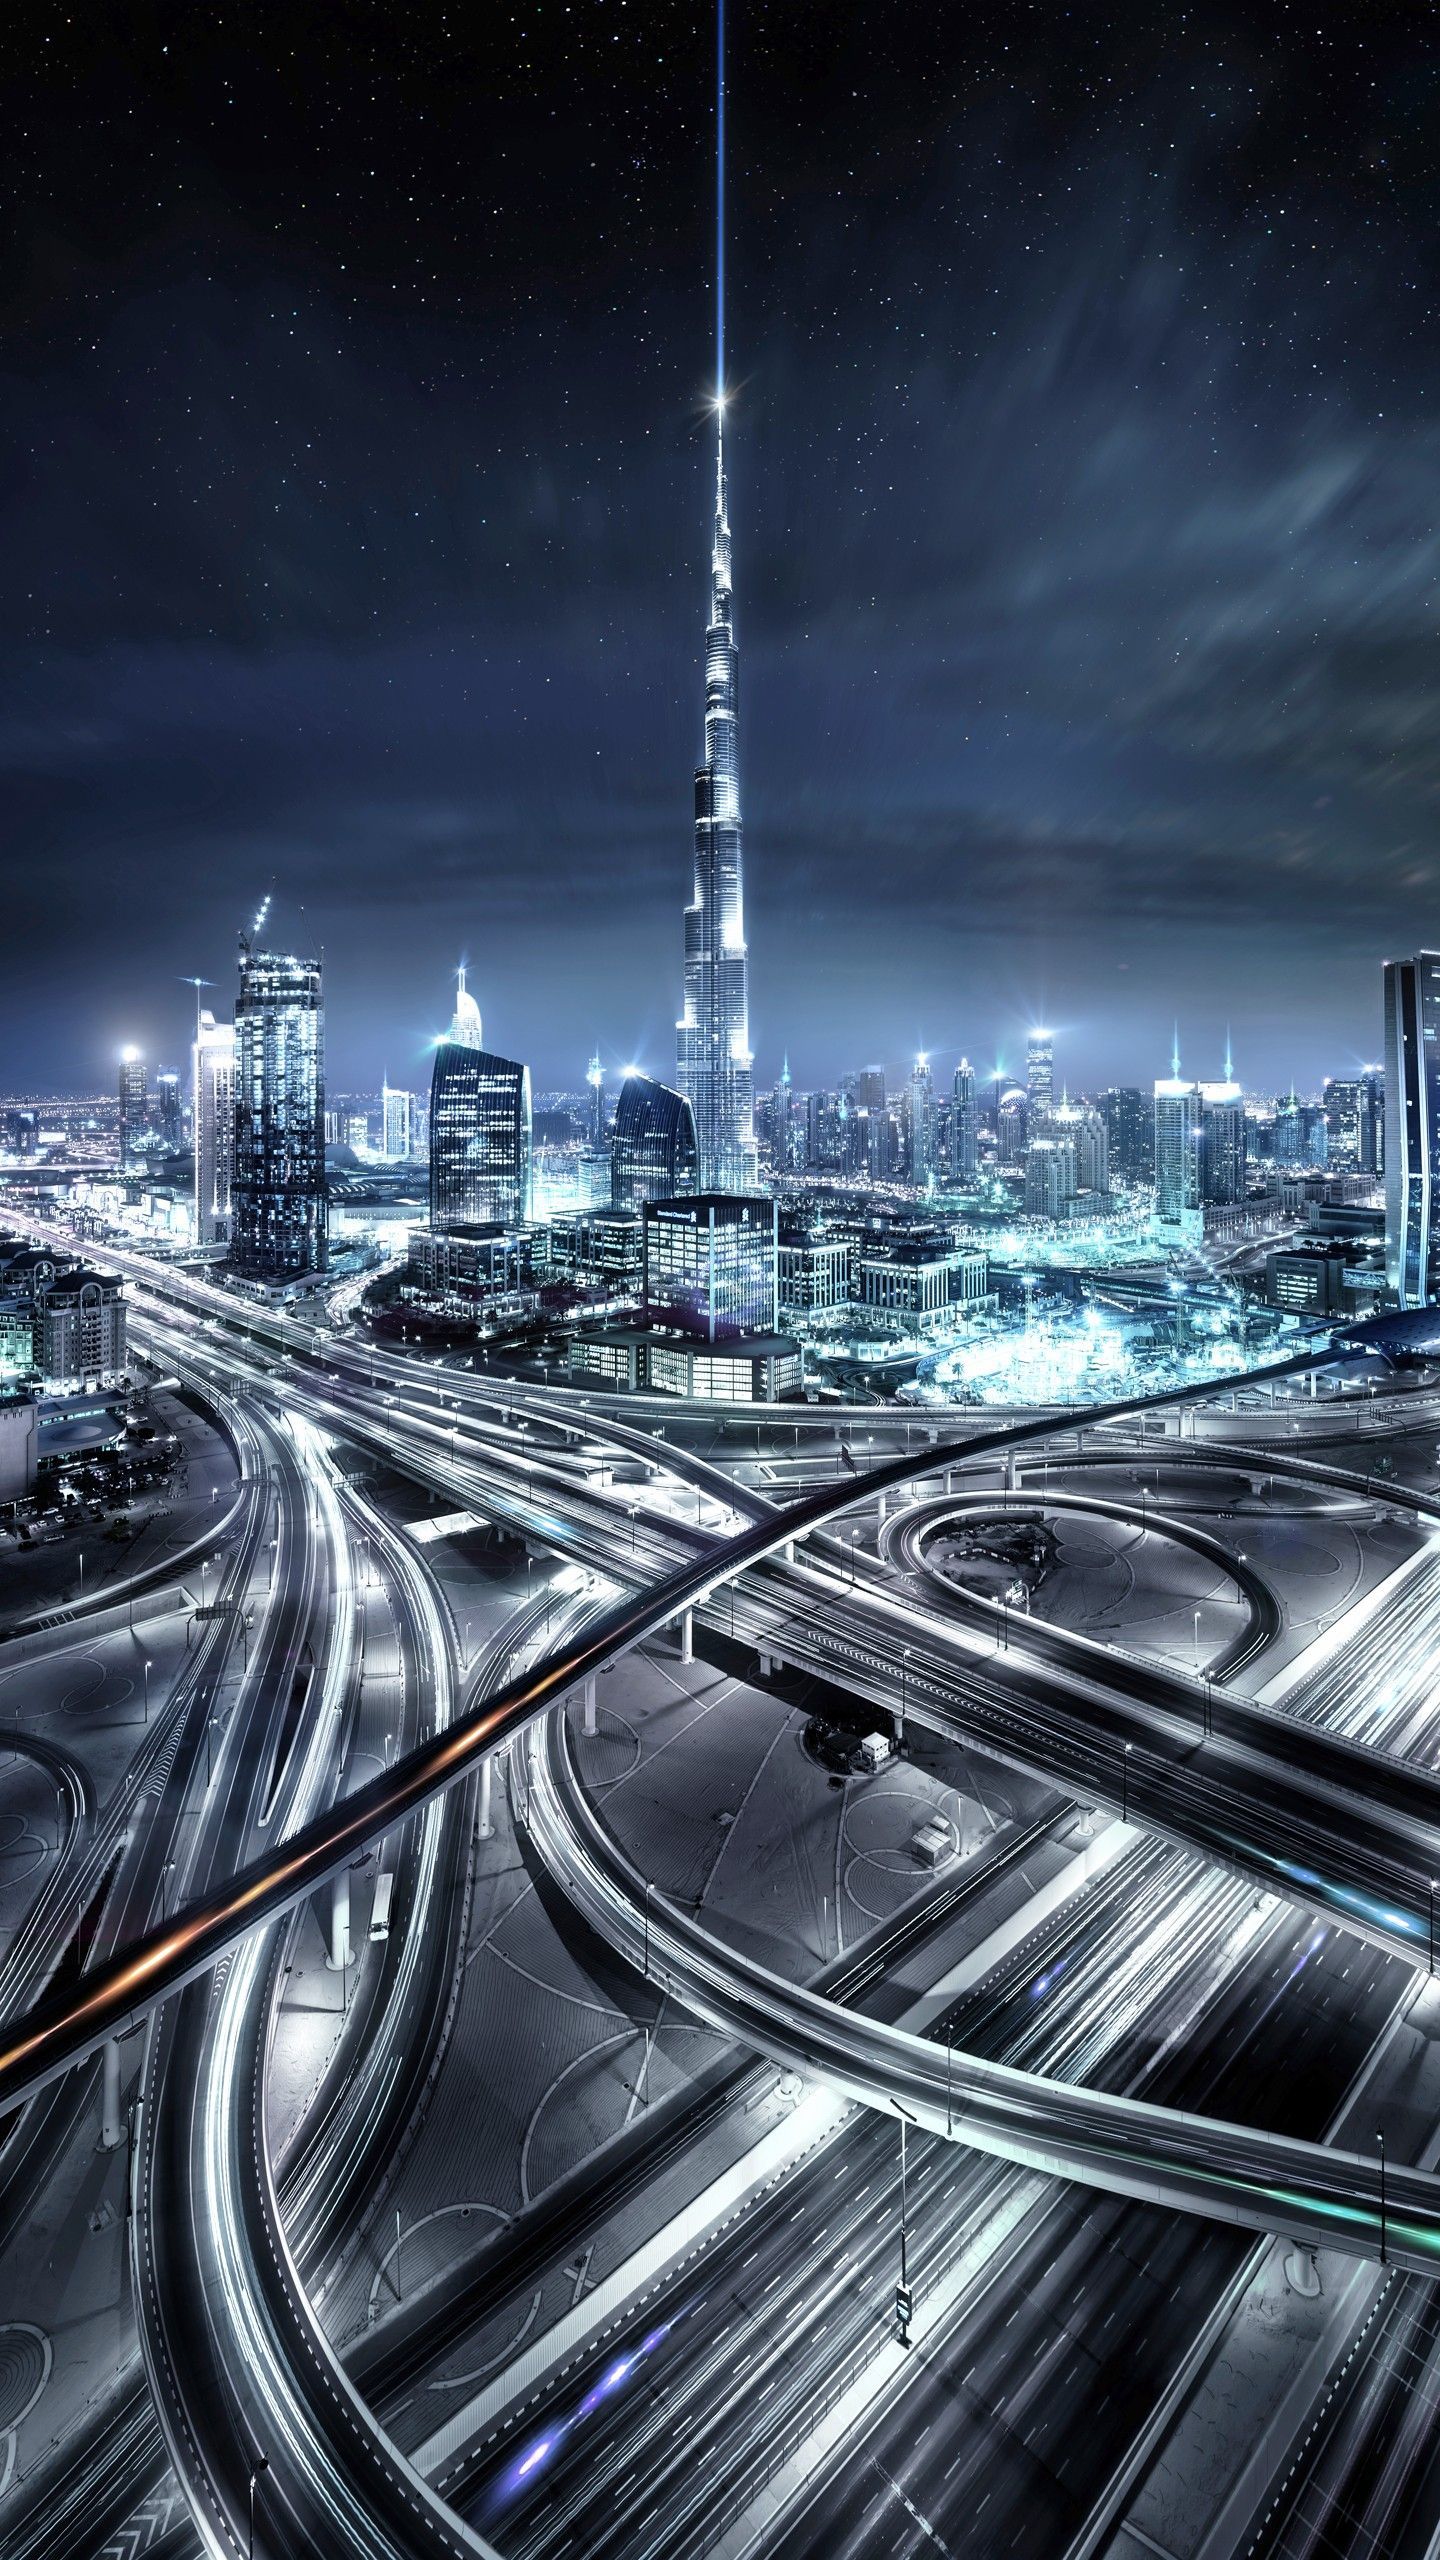 portrait display, #aerial view, #long exposure, #Dubai, #United Arab Emirates, #night, #stars, #clouds, #lights, #sk. Dubai city, Burj khalifa, City architecture